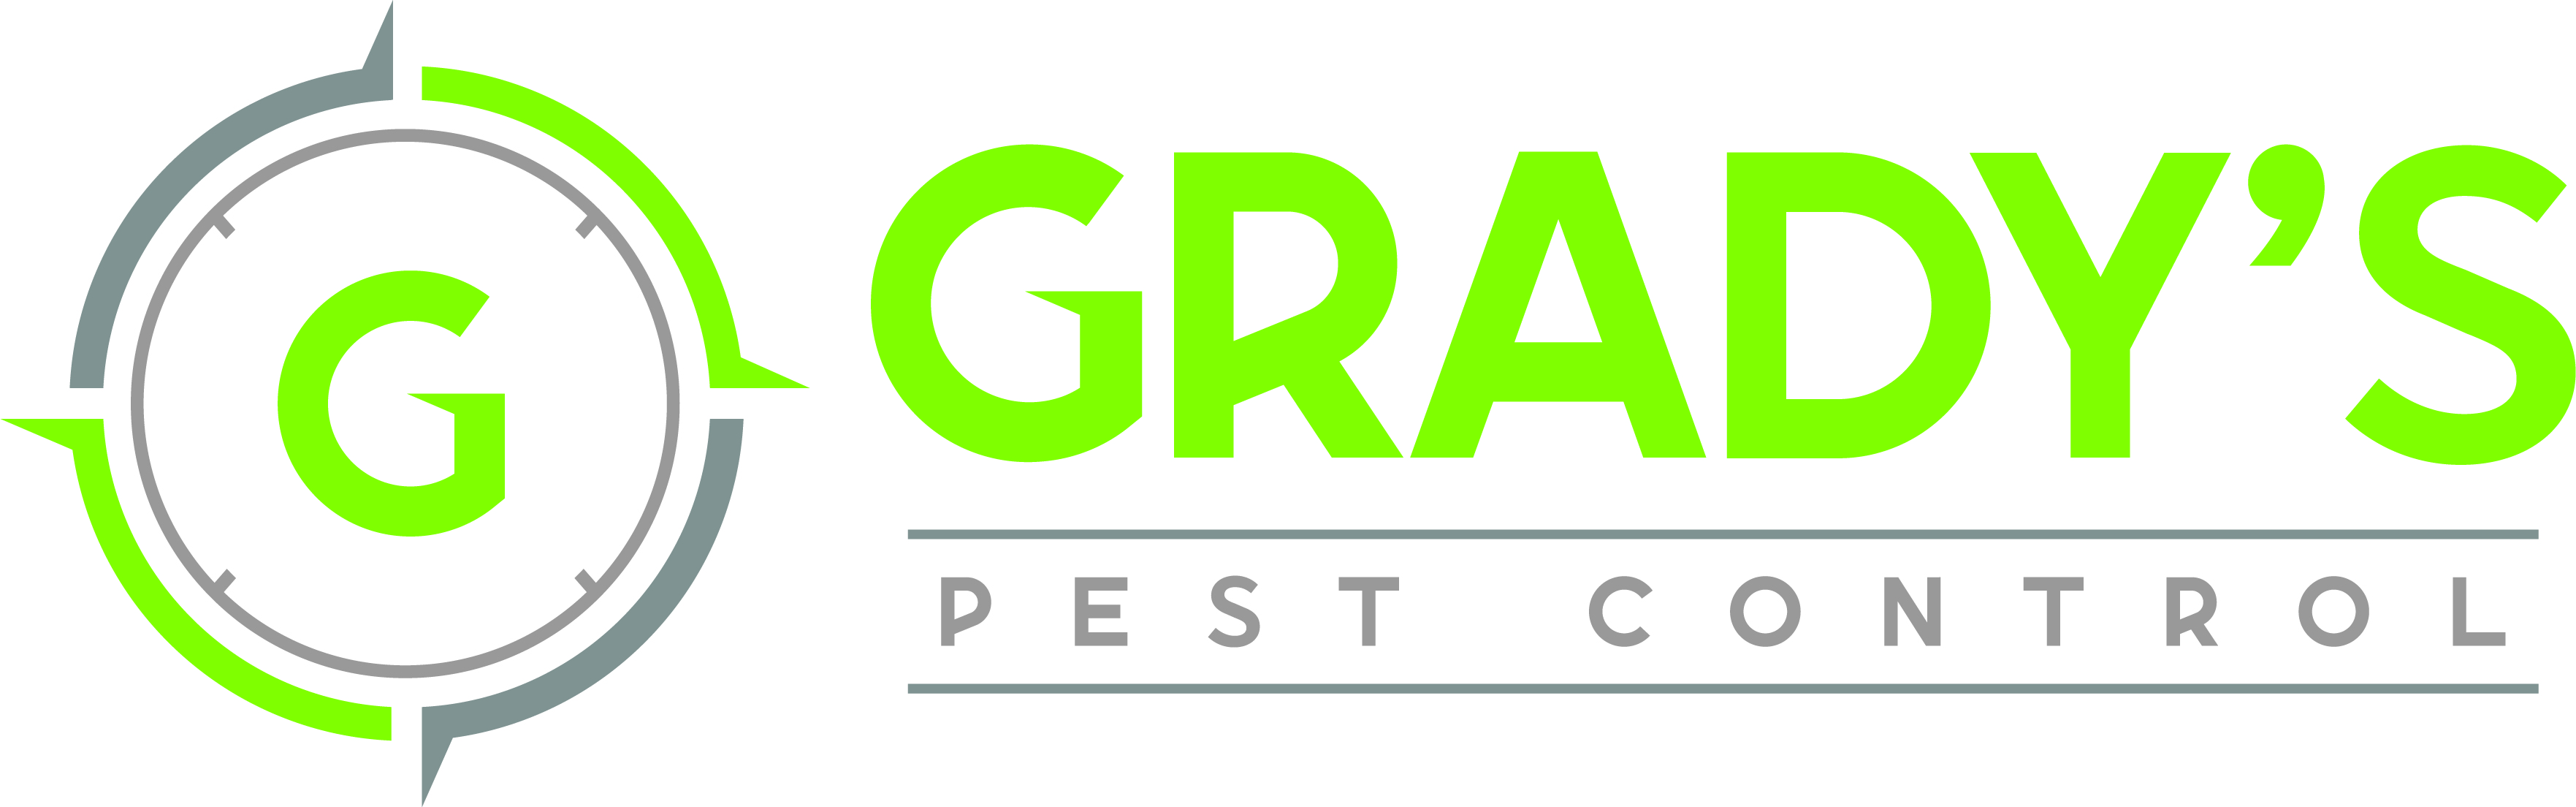 Grady's Pest Control, Inc Logo